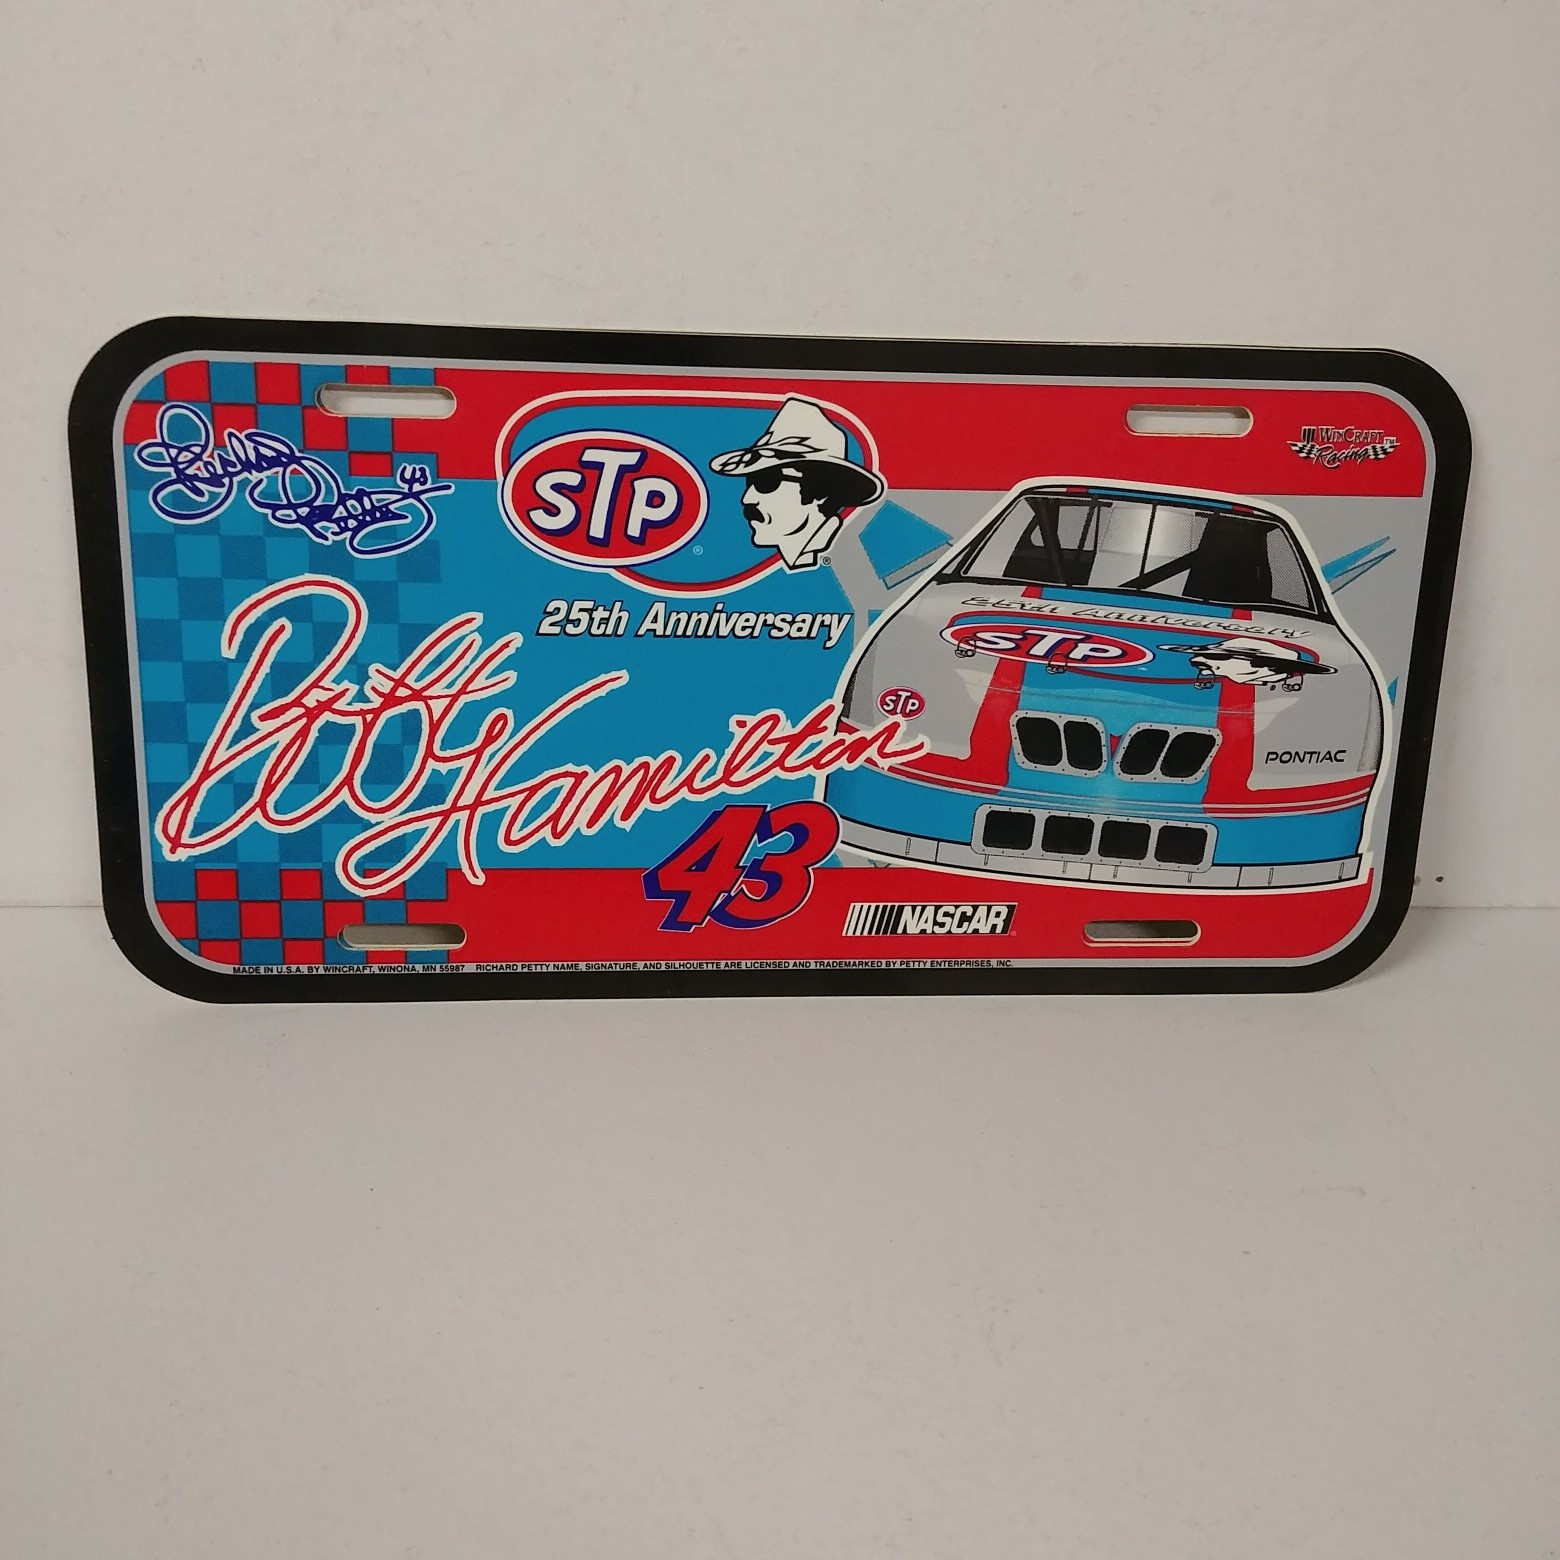 1996 Bobby Hamilton STP 25th Anniversary plastic license plate